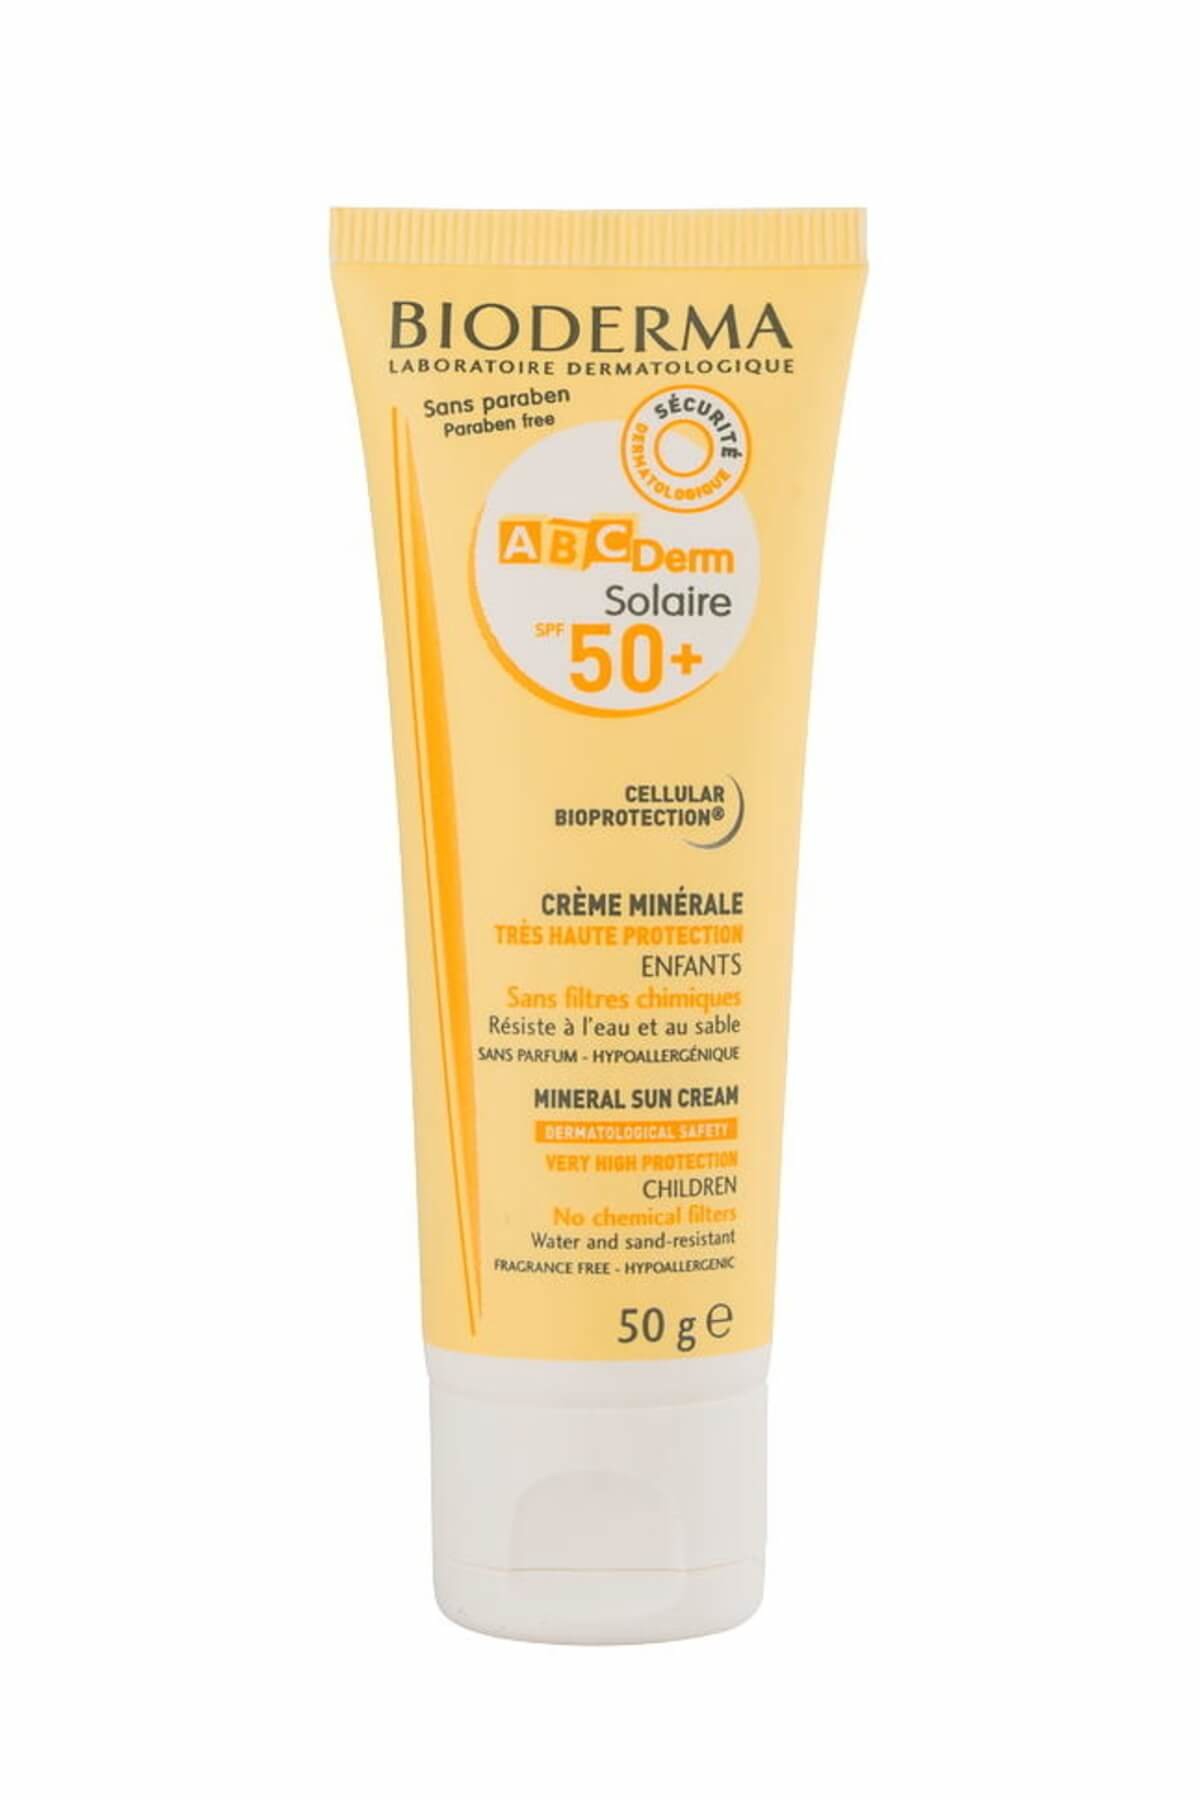 Bioderma Abc Derm Mineral Sun Cream Spf 50+ 50 g 3401396936770